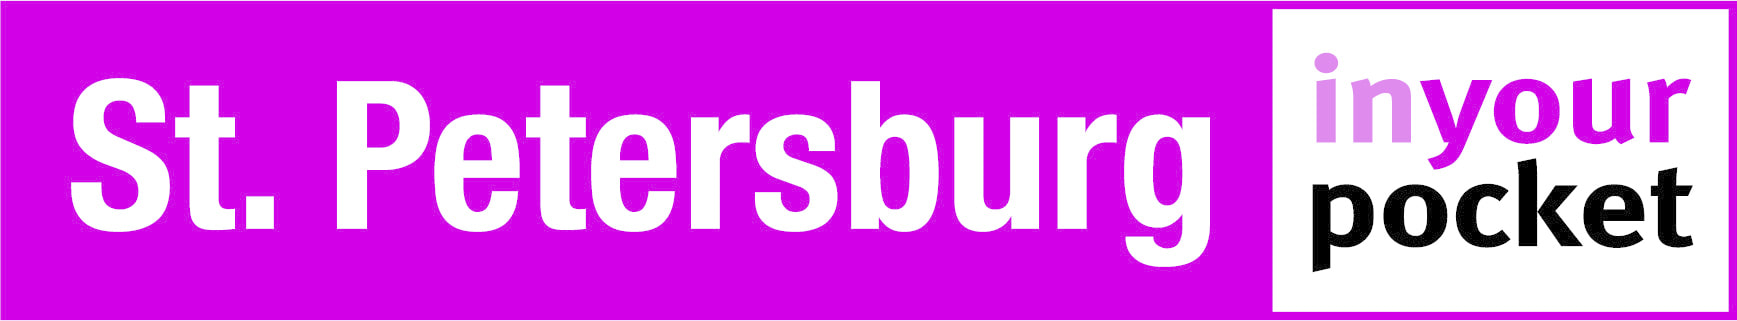 logo-new-spb-purple_1_orig.jpg